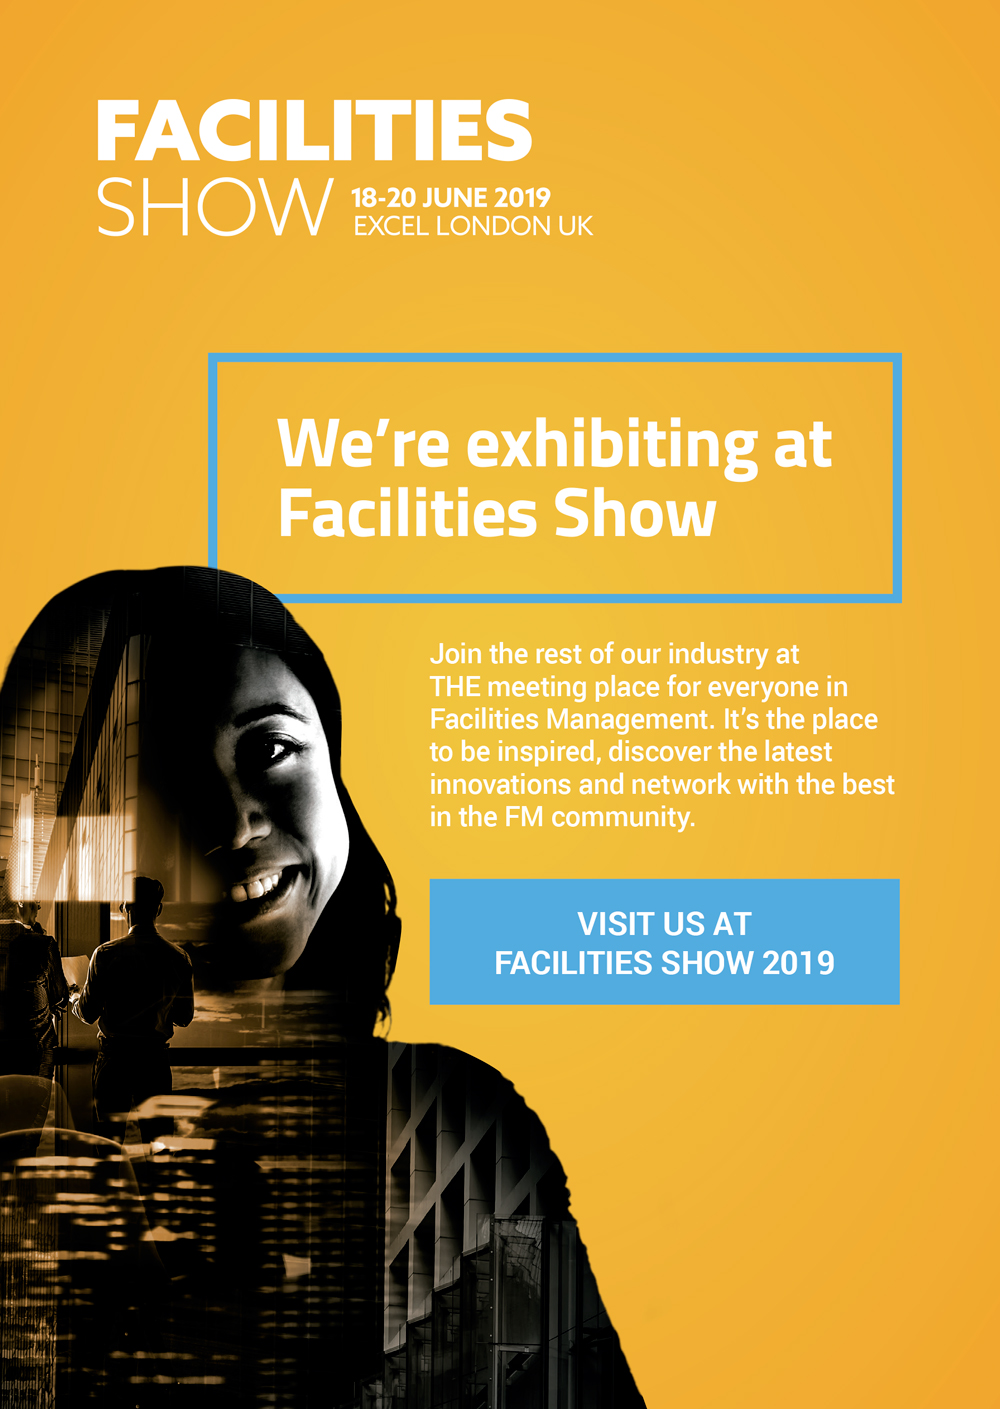 Facilities Show 2019 Image